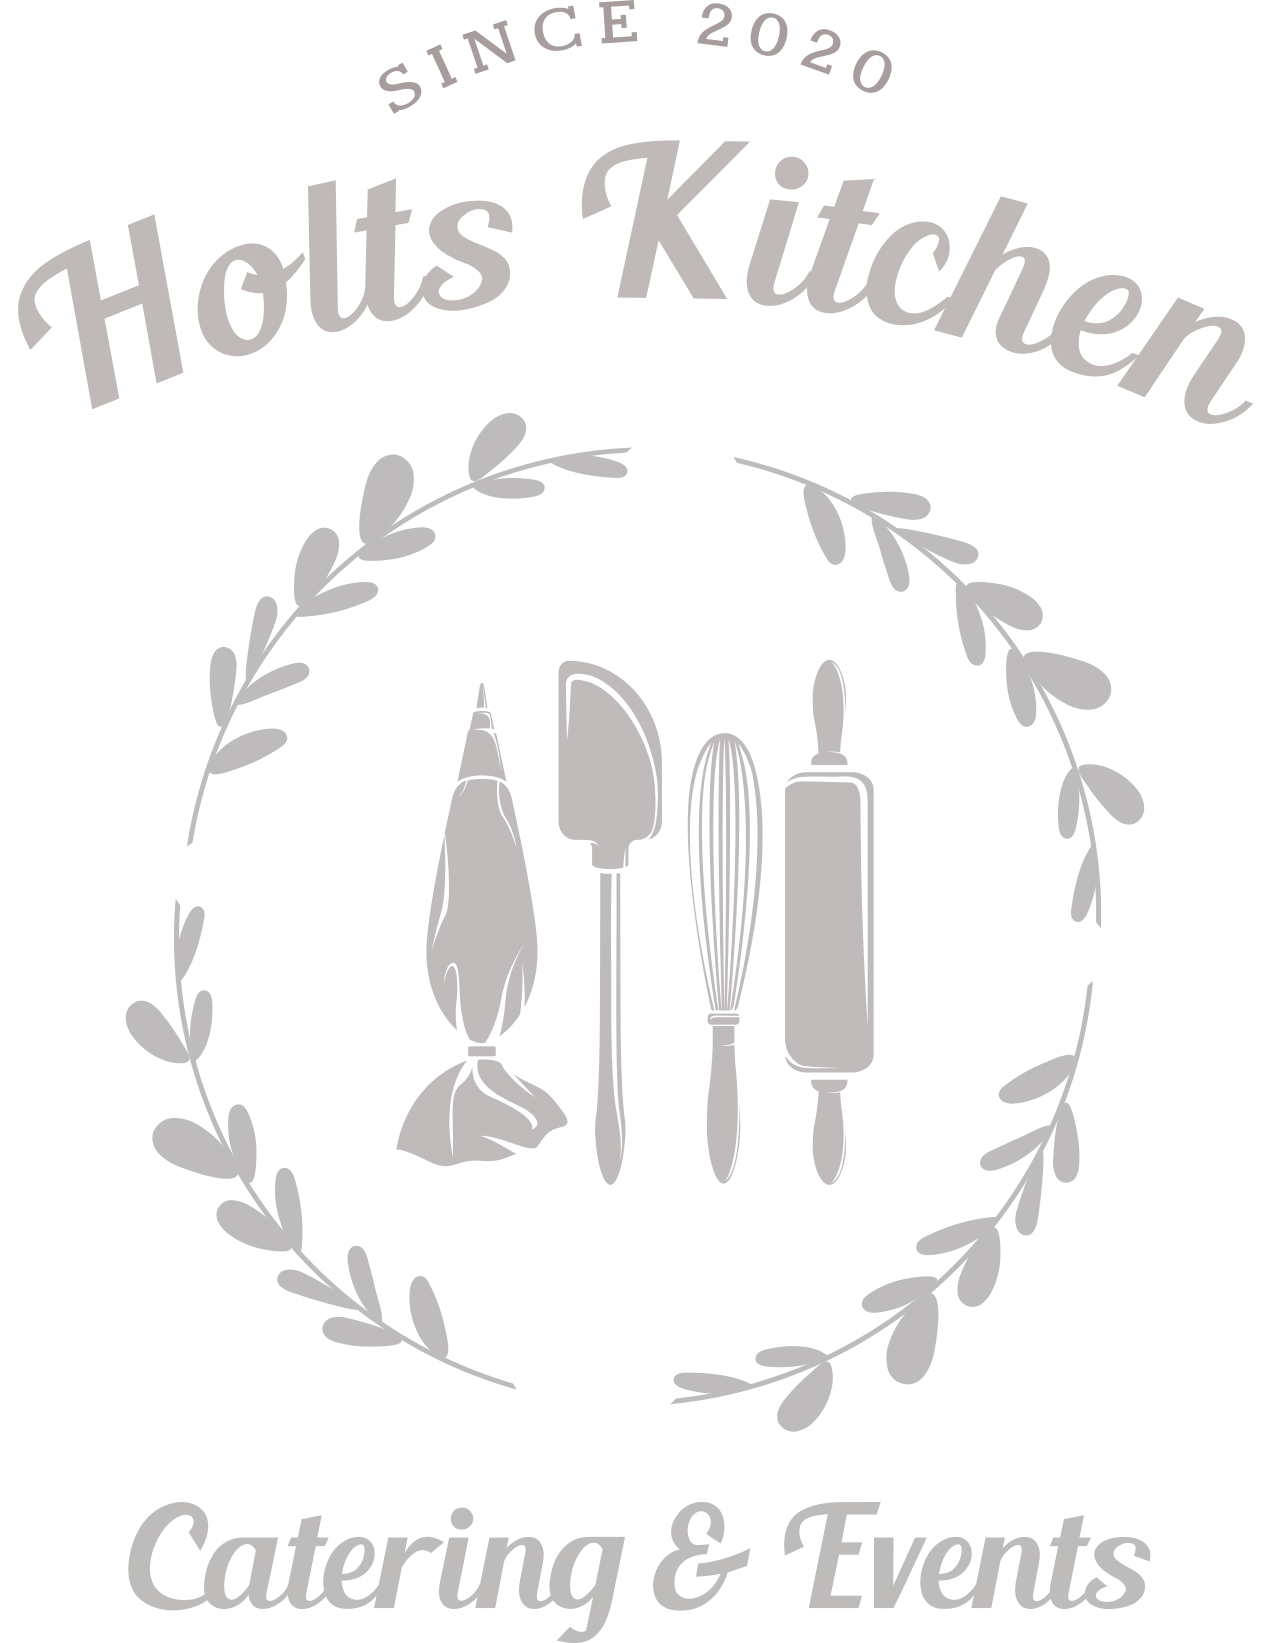 Holts Kitchen's logo